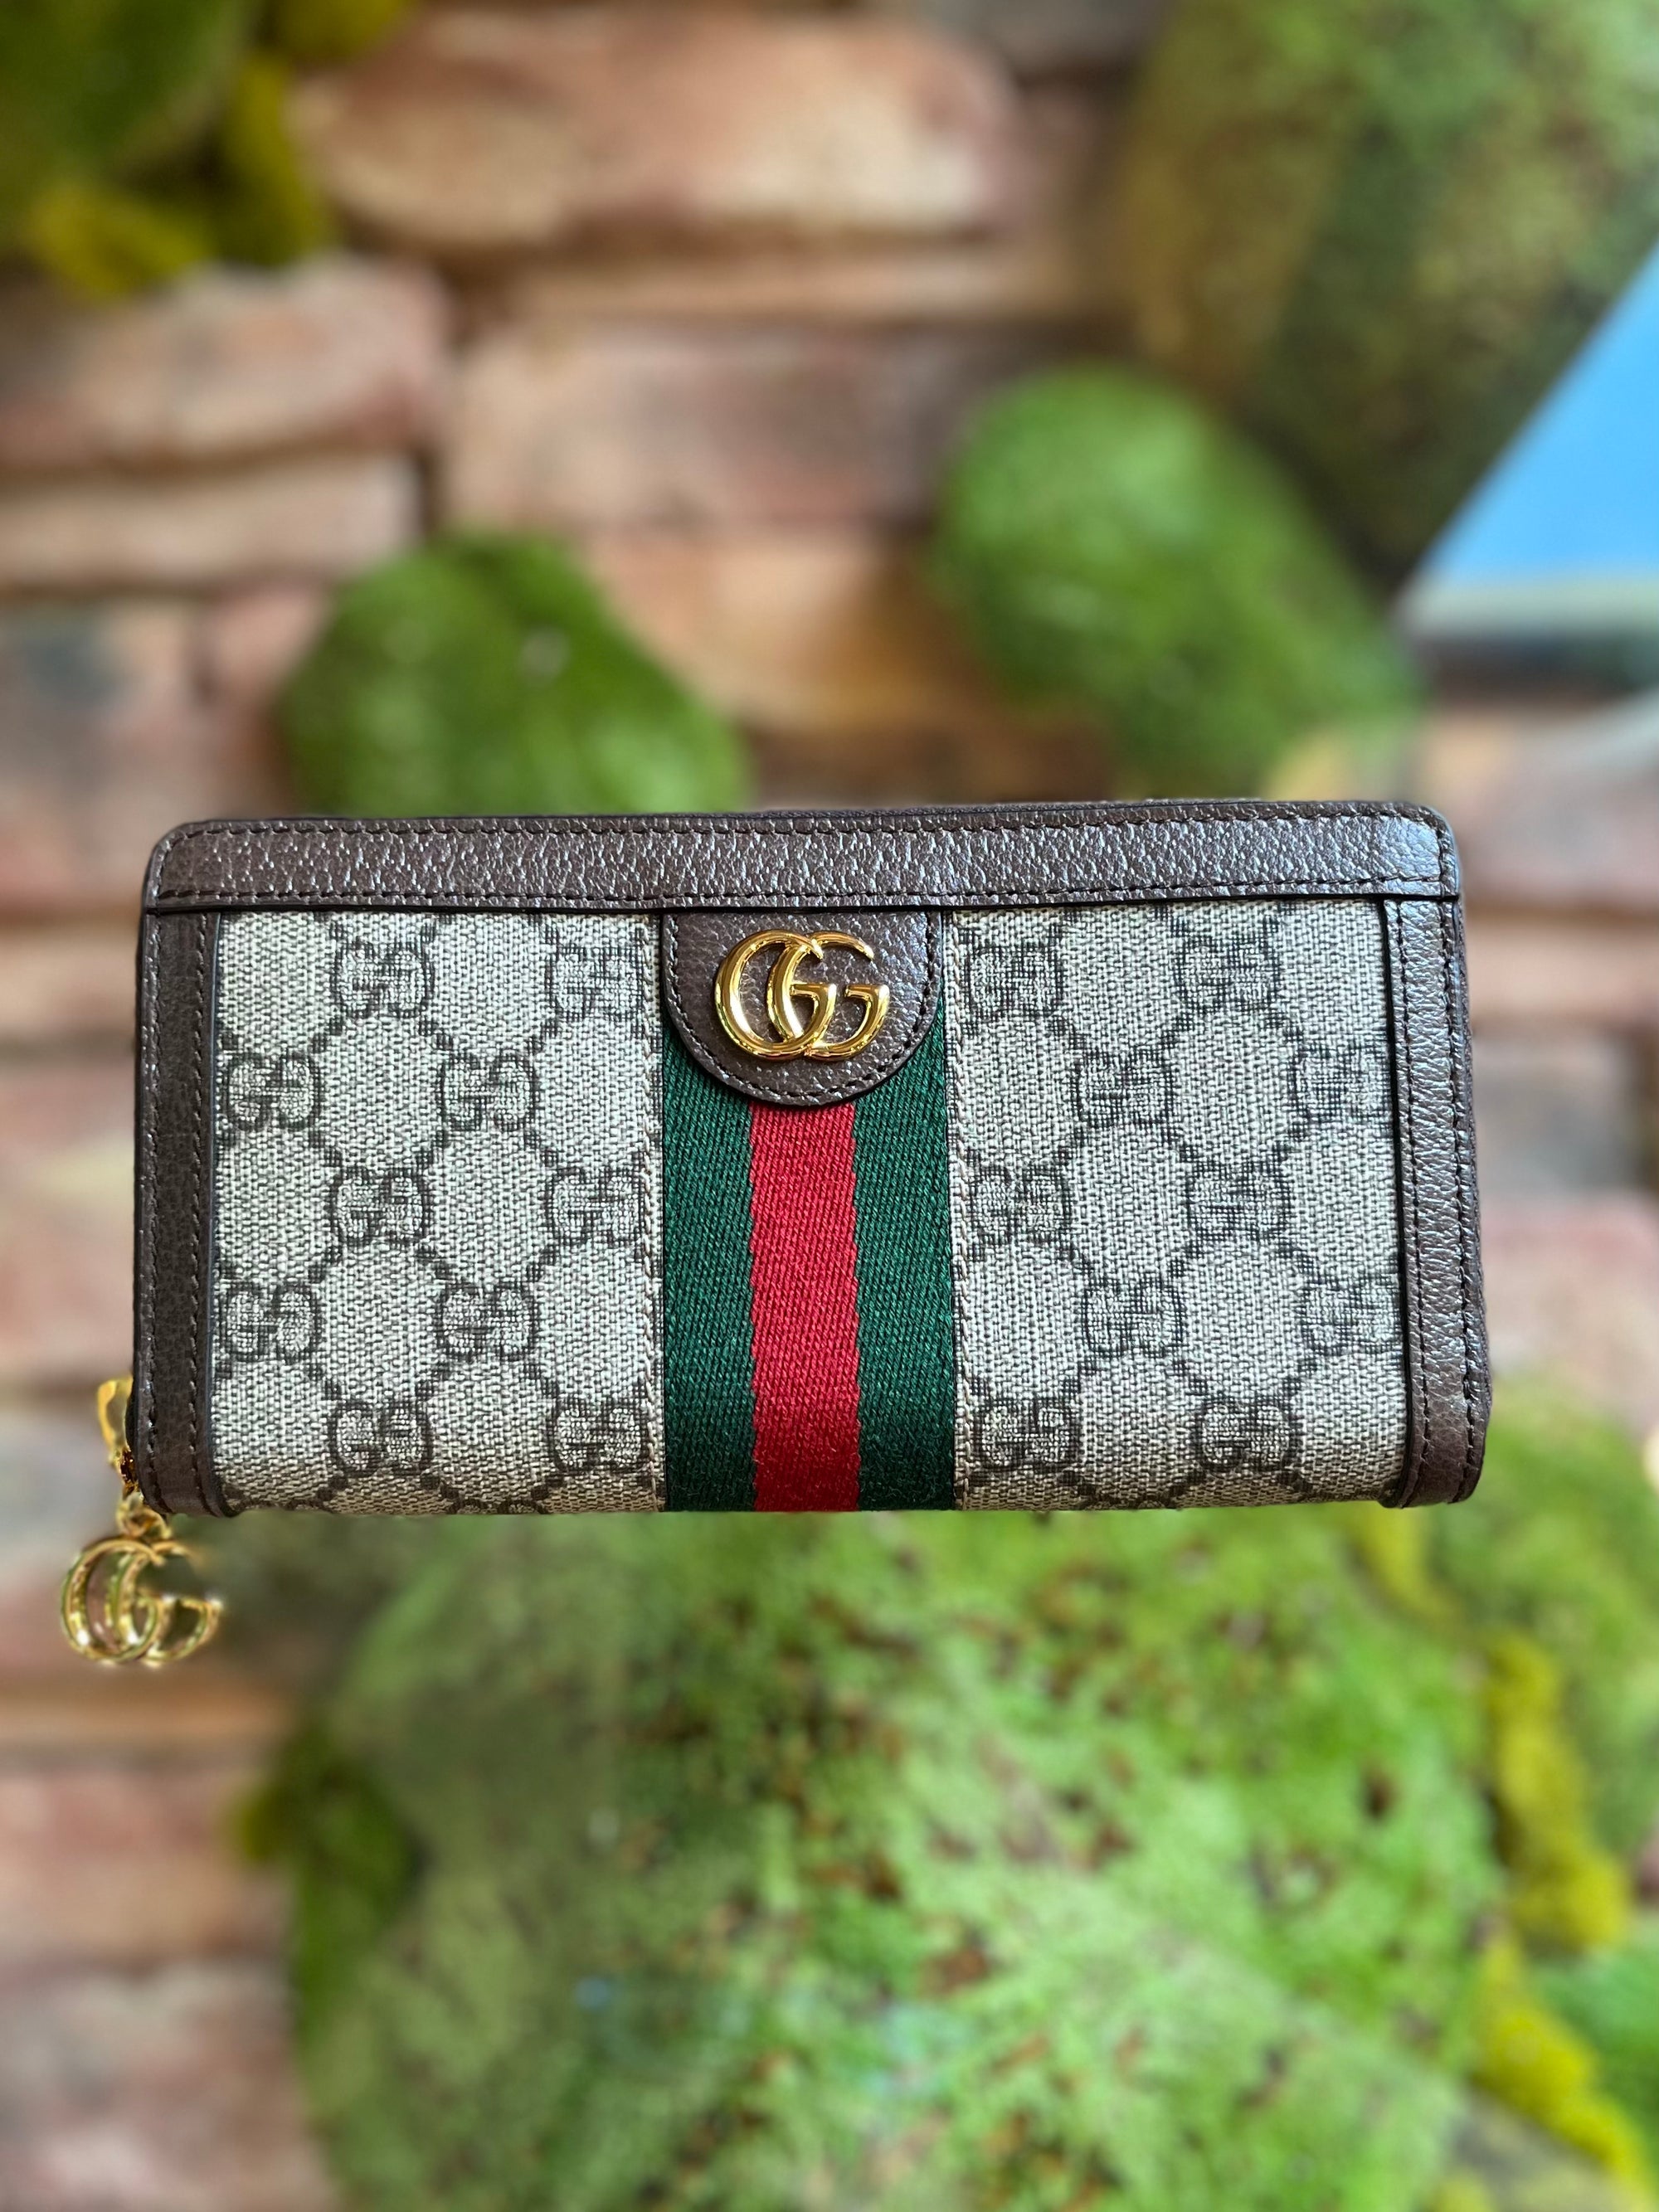 authentic Gucci logo purse - THRIFTWARES